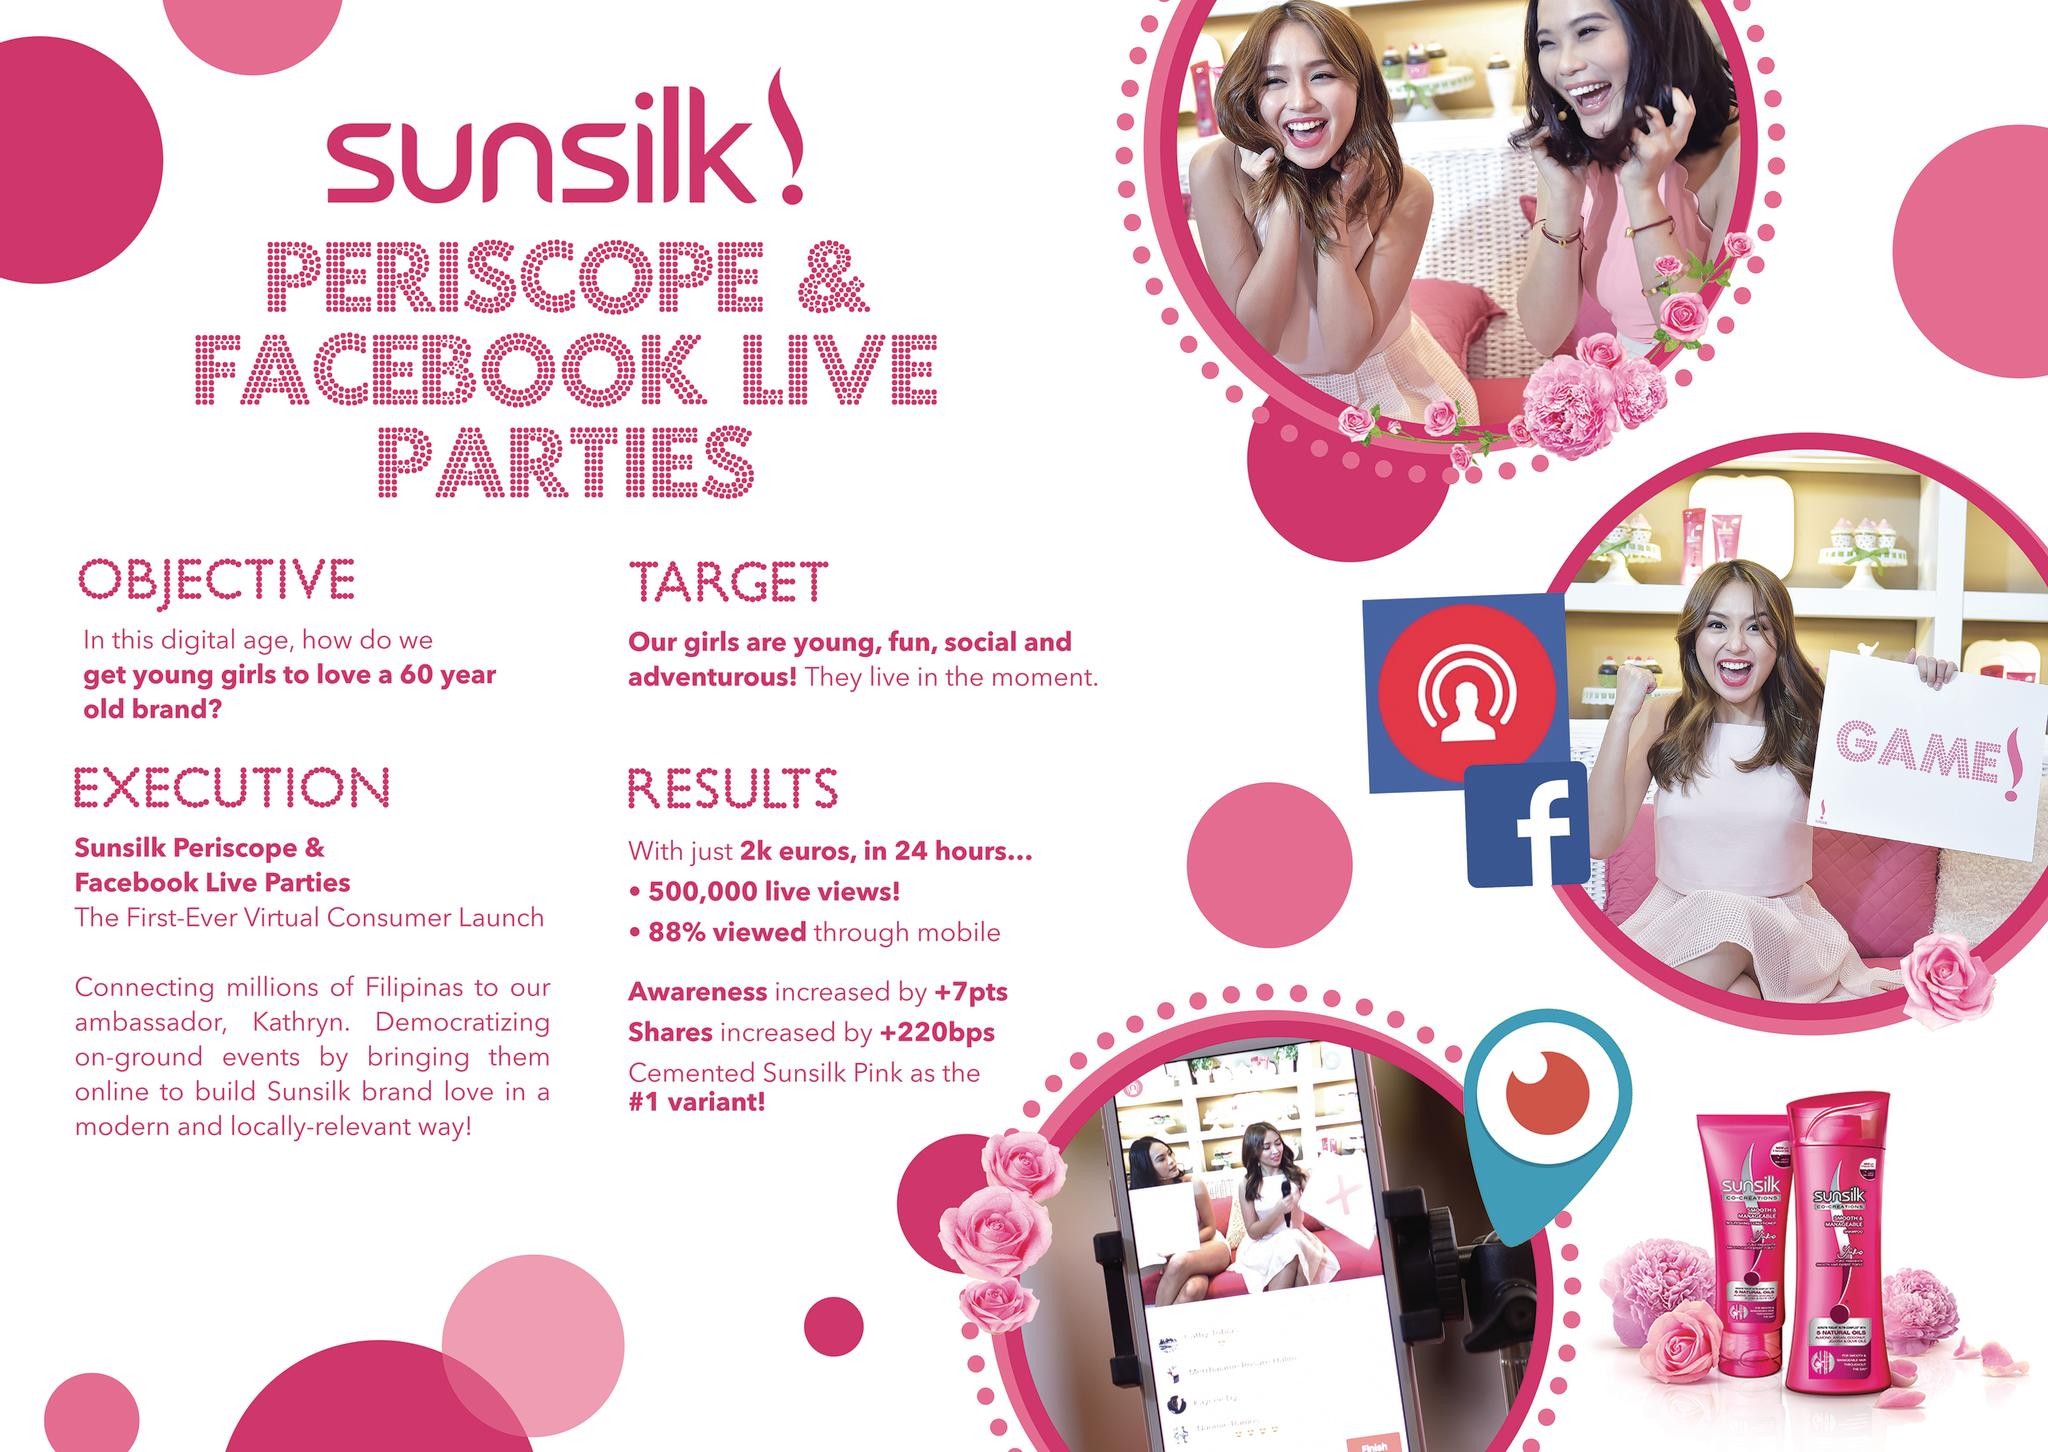 Sunsilk Periscope and Facebook Live Parties